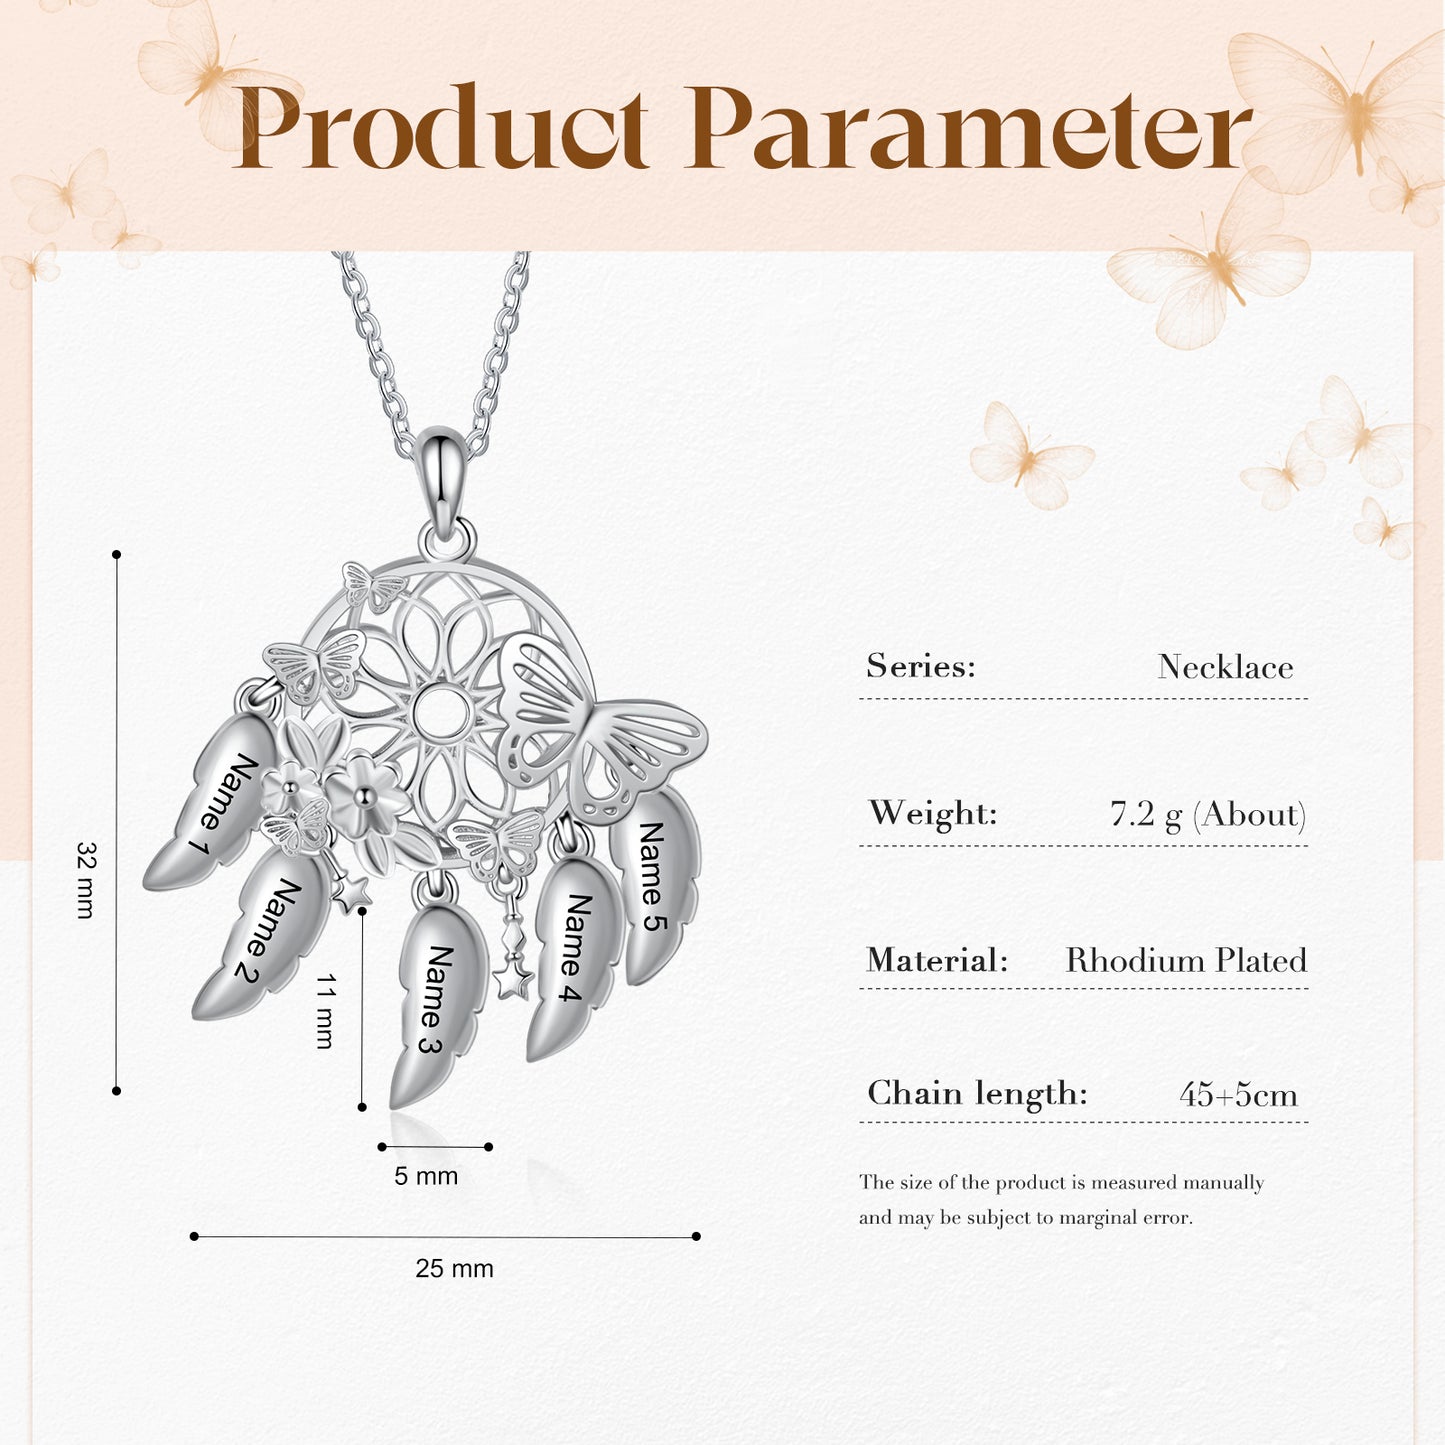 Custom Dreamcatcher Necklace